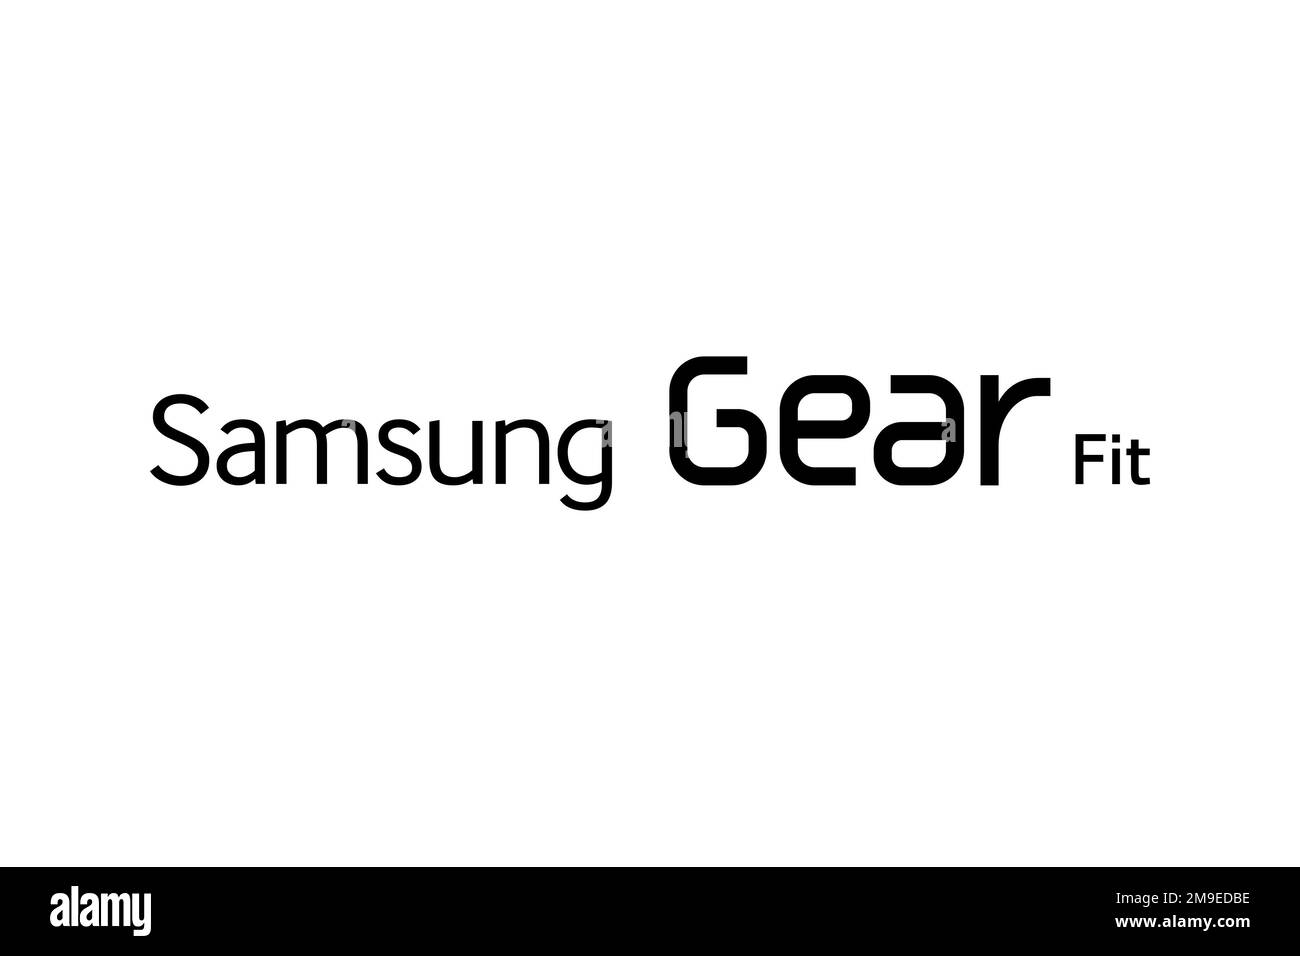 Samsung Gear Fit, Logo, White Background Stock Photo